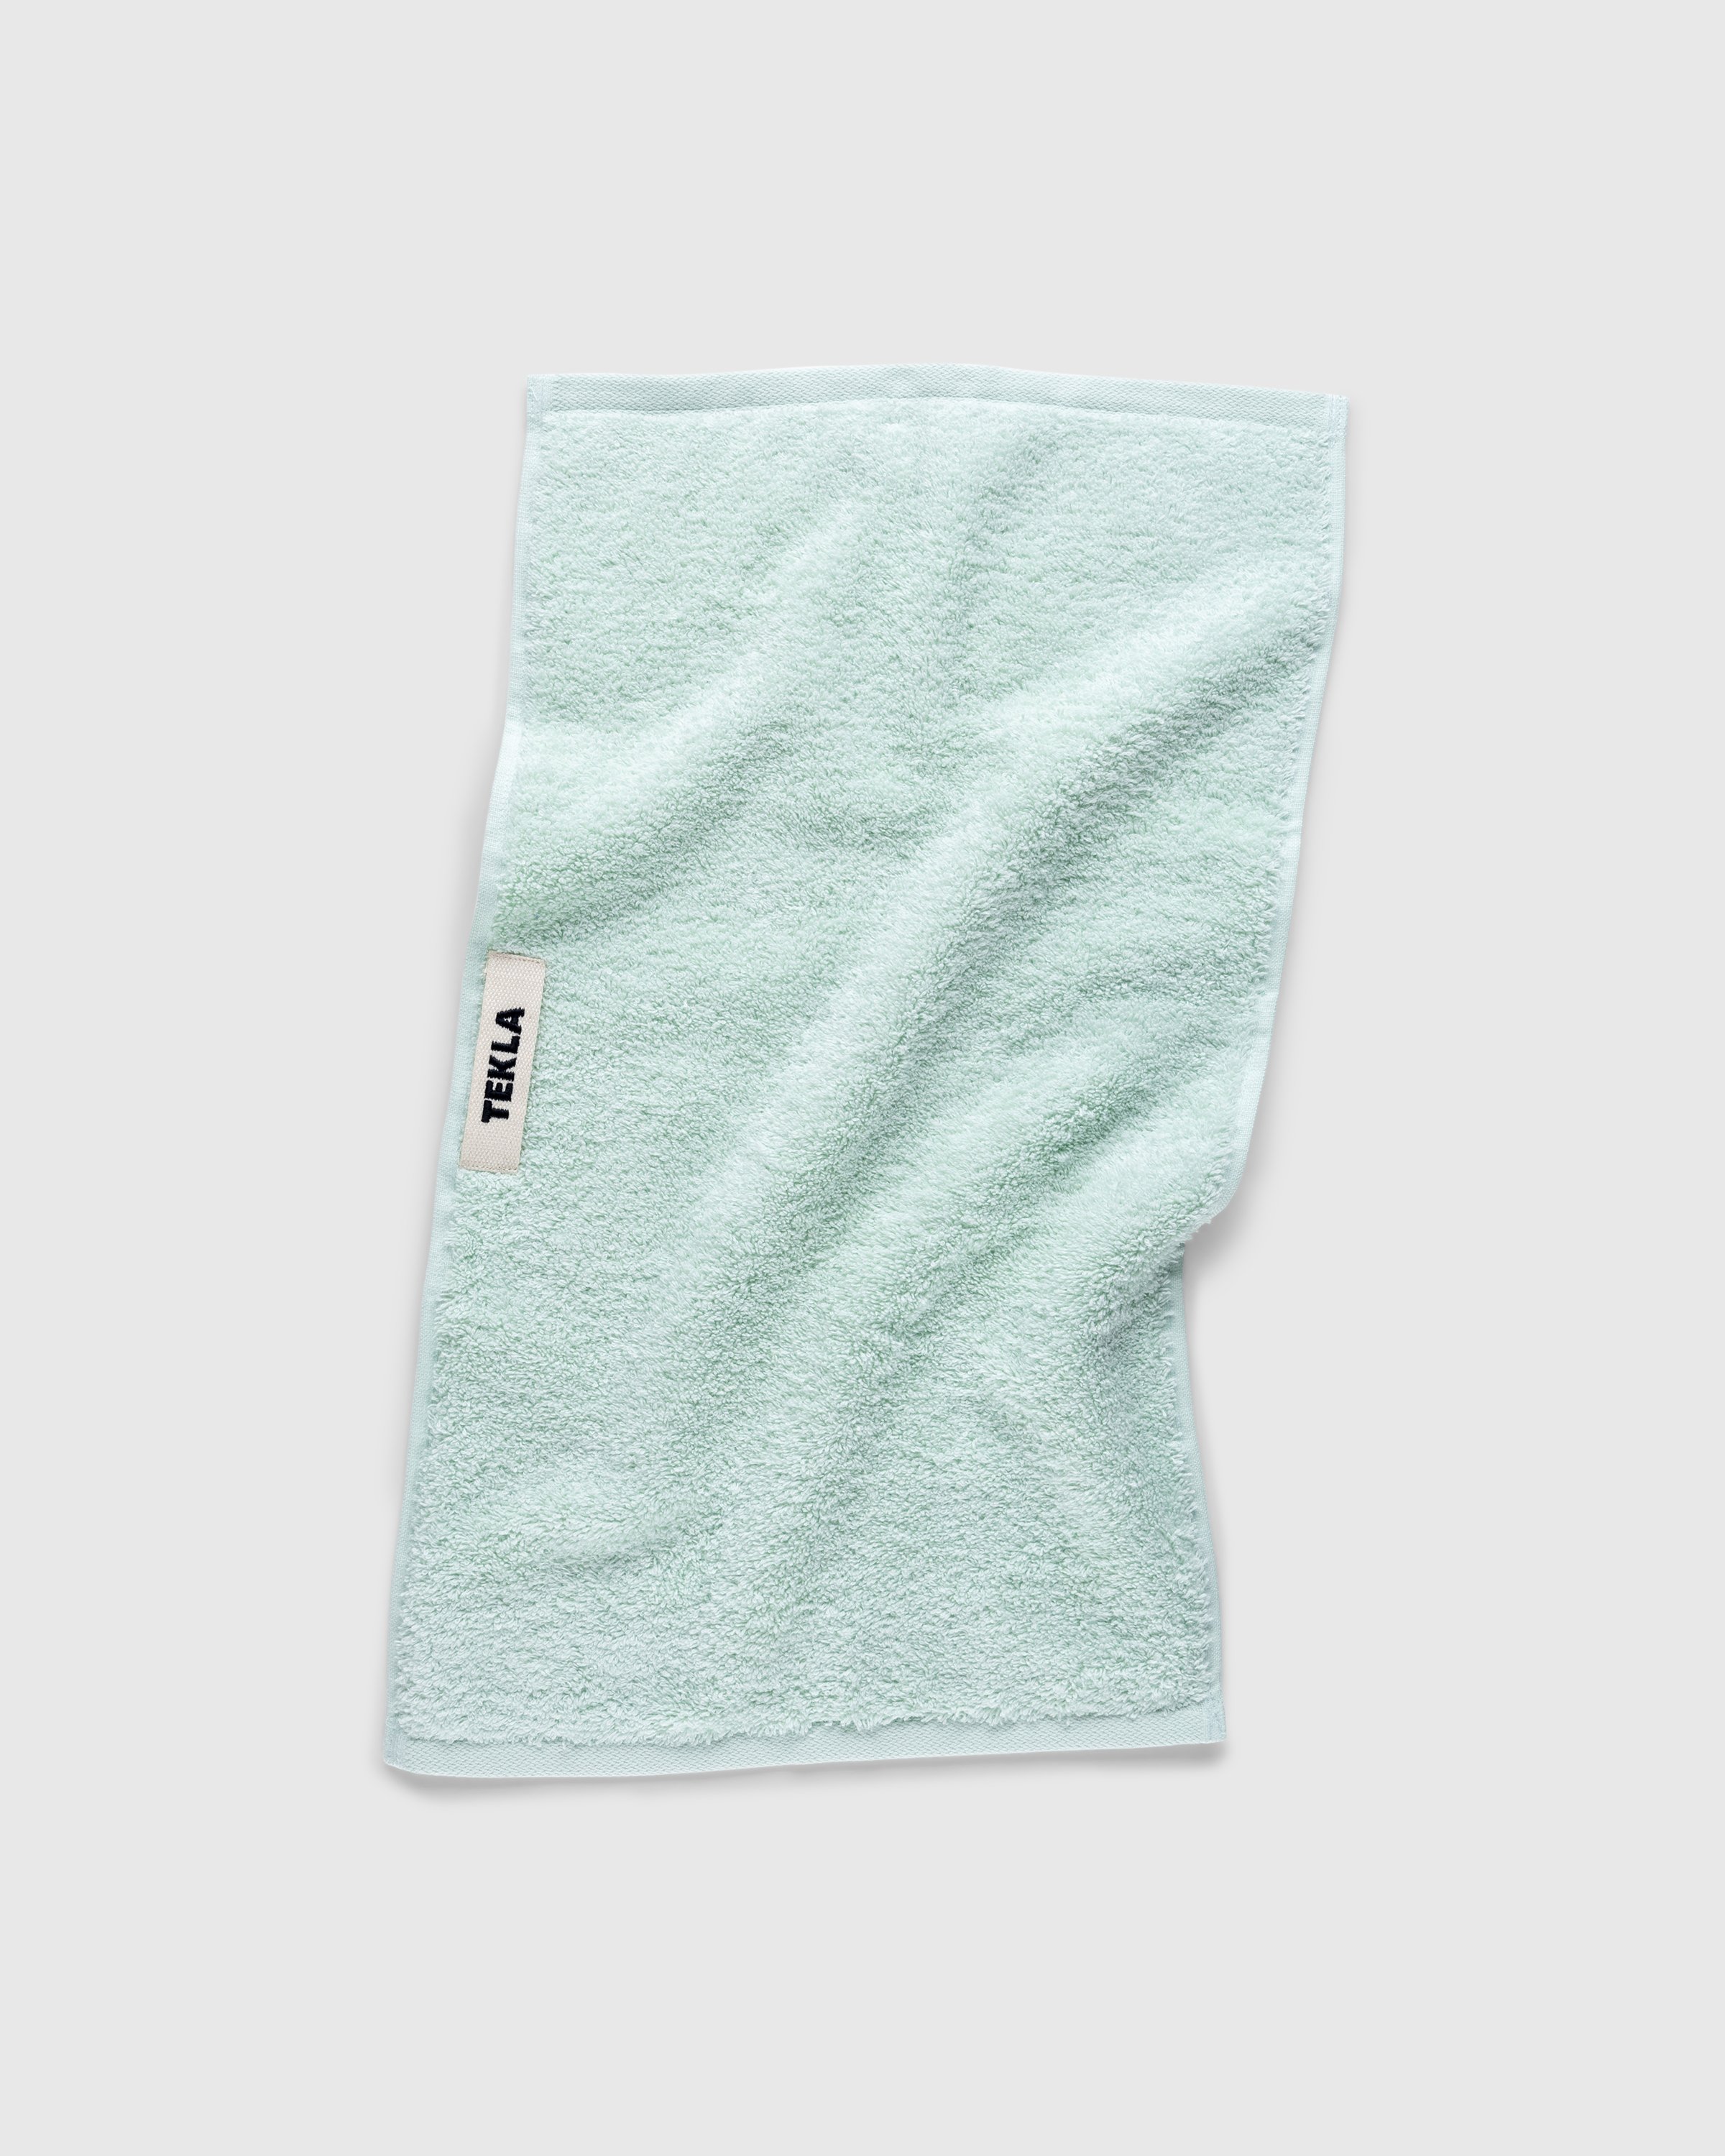 Tekla - Guest Towel Mint - Lifestyle - Green - Image 1